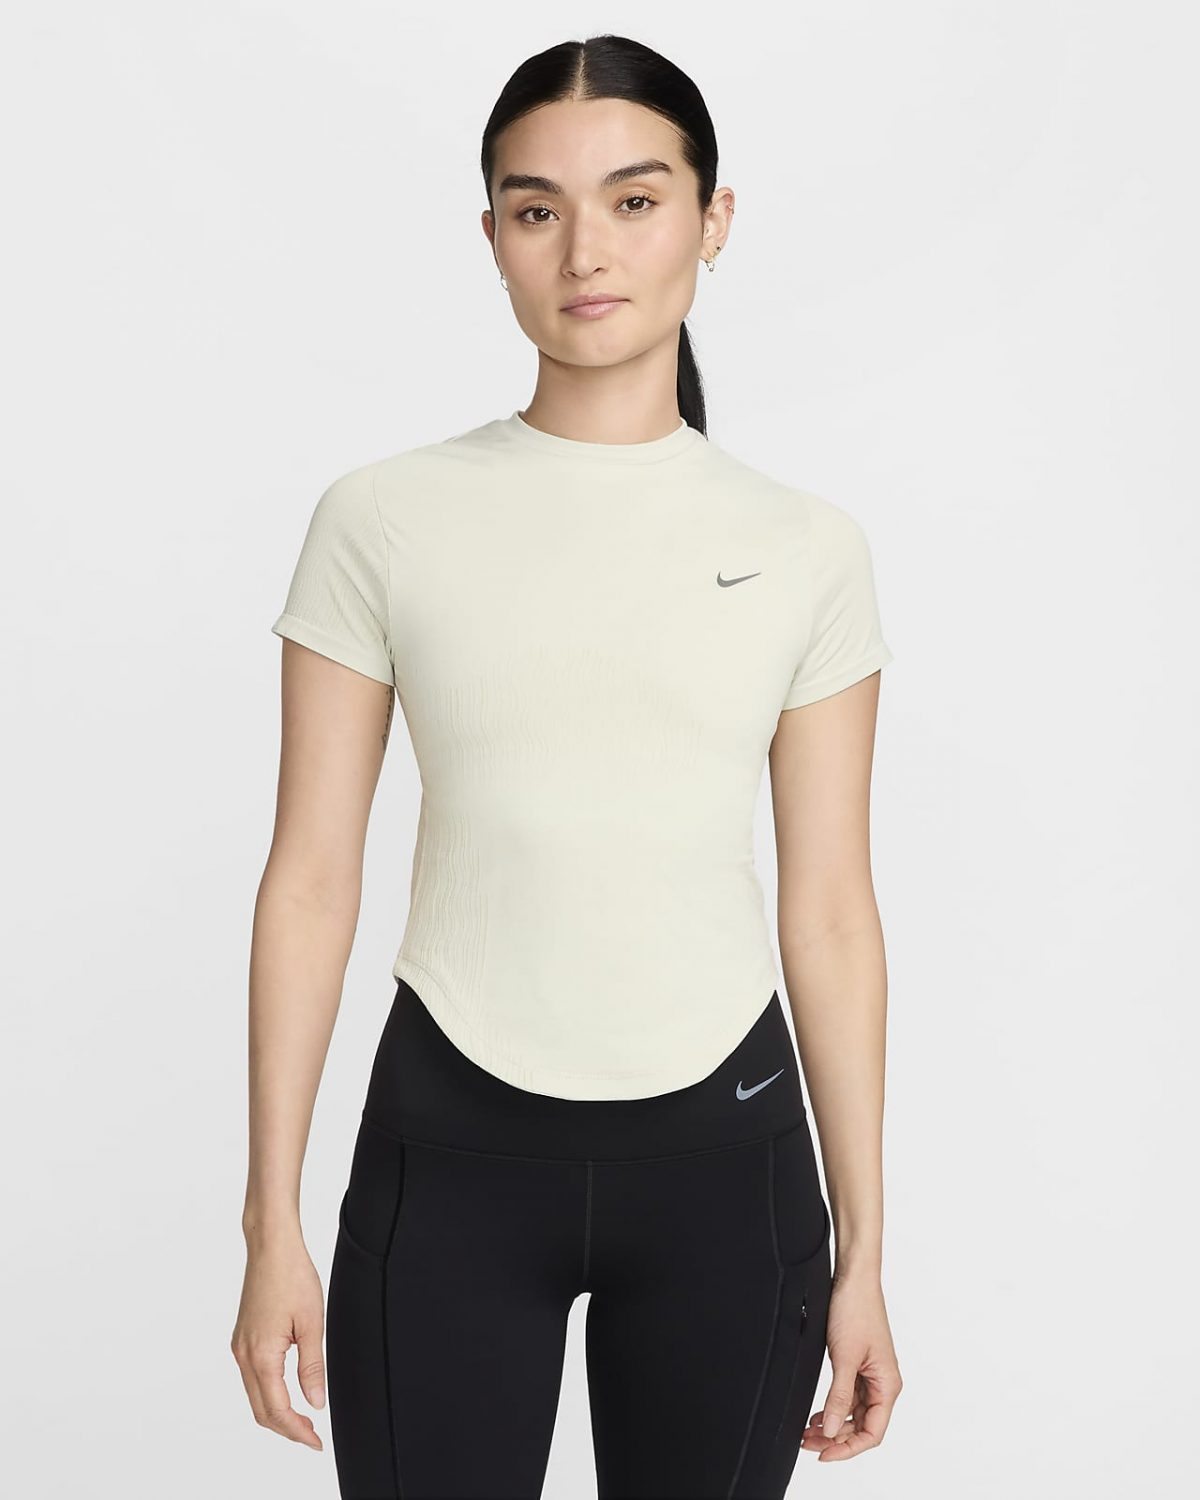 Женский топ Nike Running Division серый фото